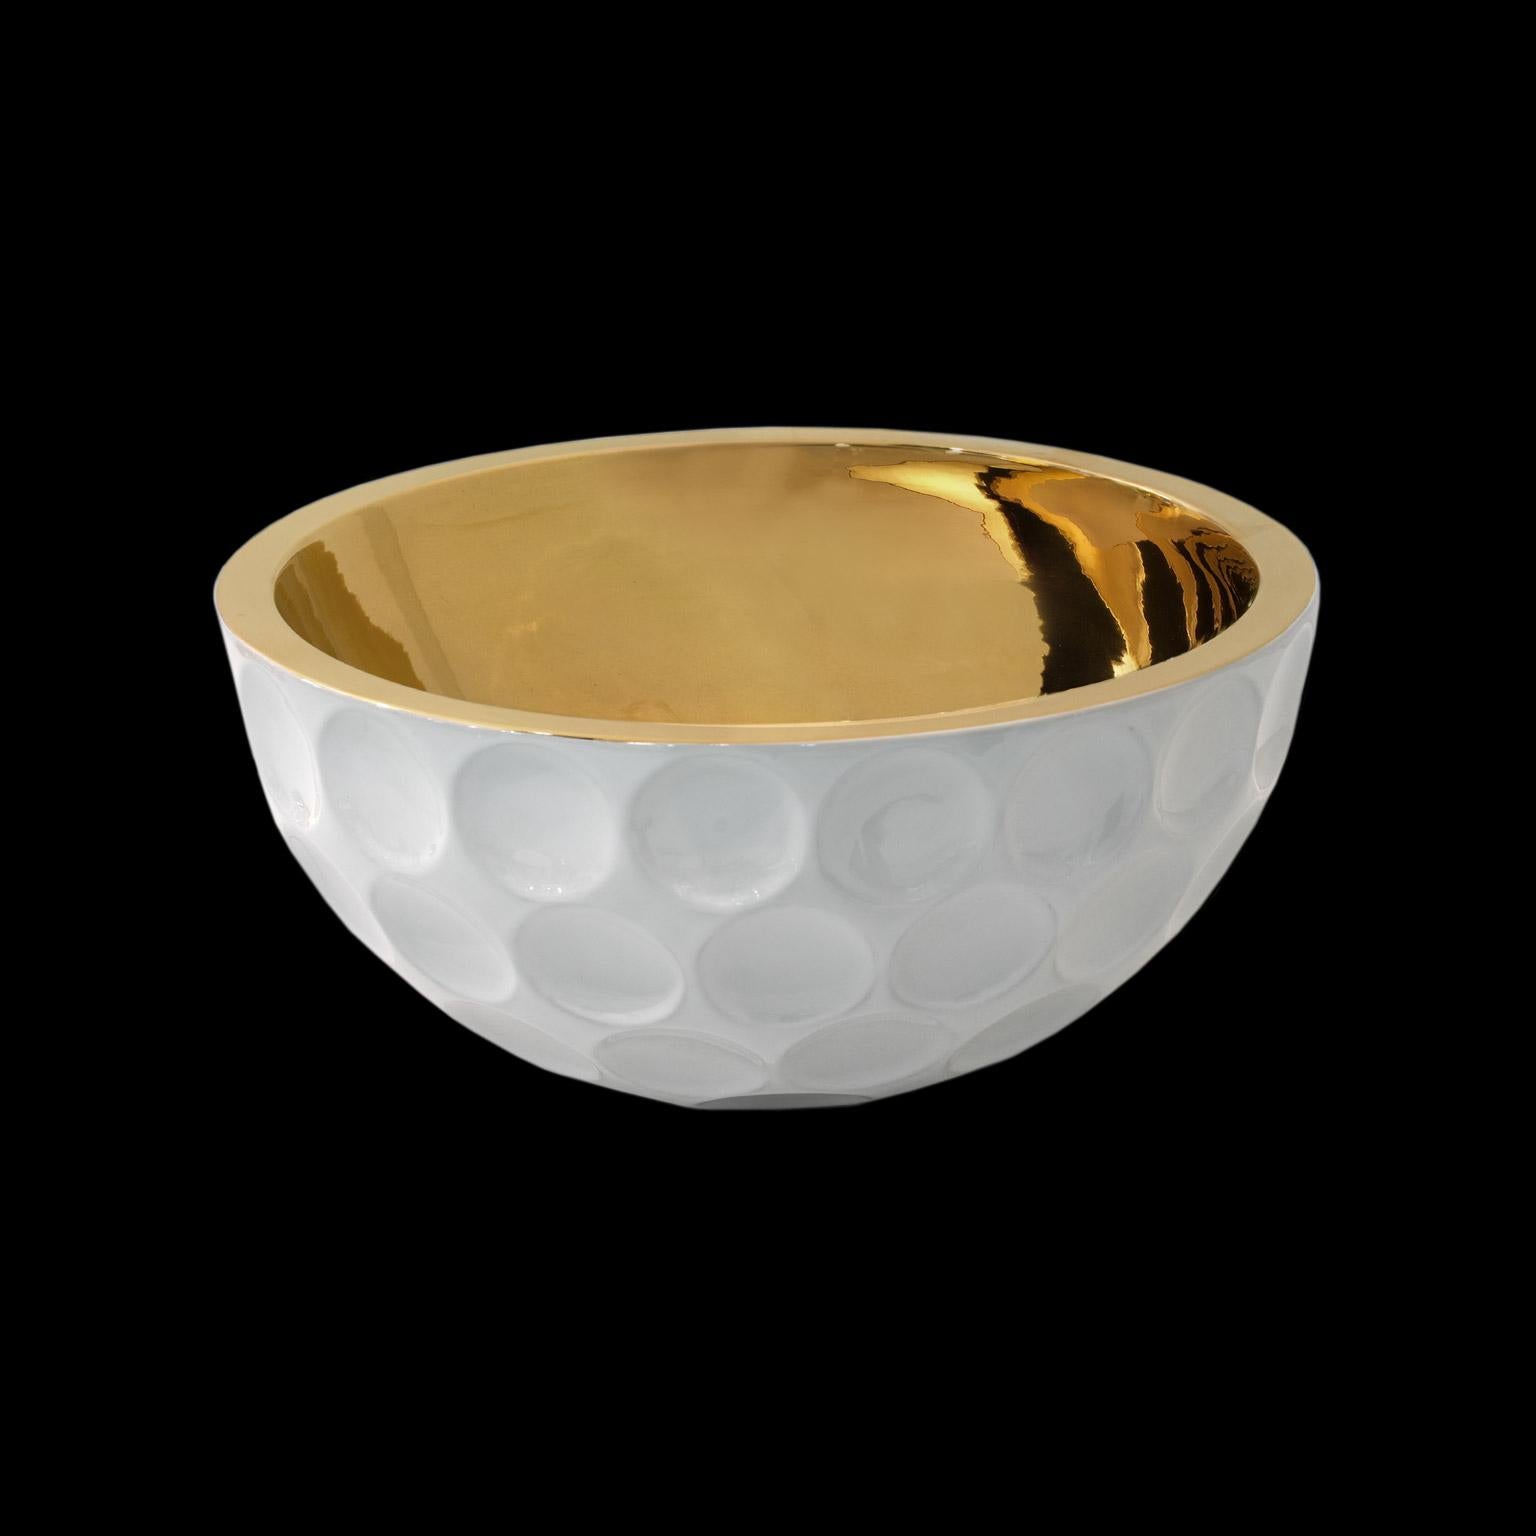 Ceramic golf bowl EAGLE
cod. HB040 
handcrafted in 24-karat gold inside 
and white enamel outside

measures: 
Height 20.0
Diameter 40.0 cm.  

        